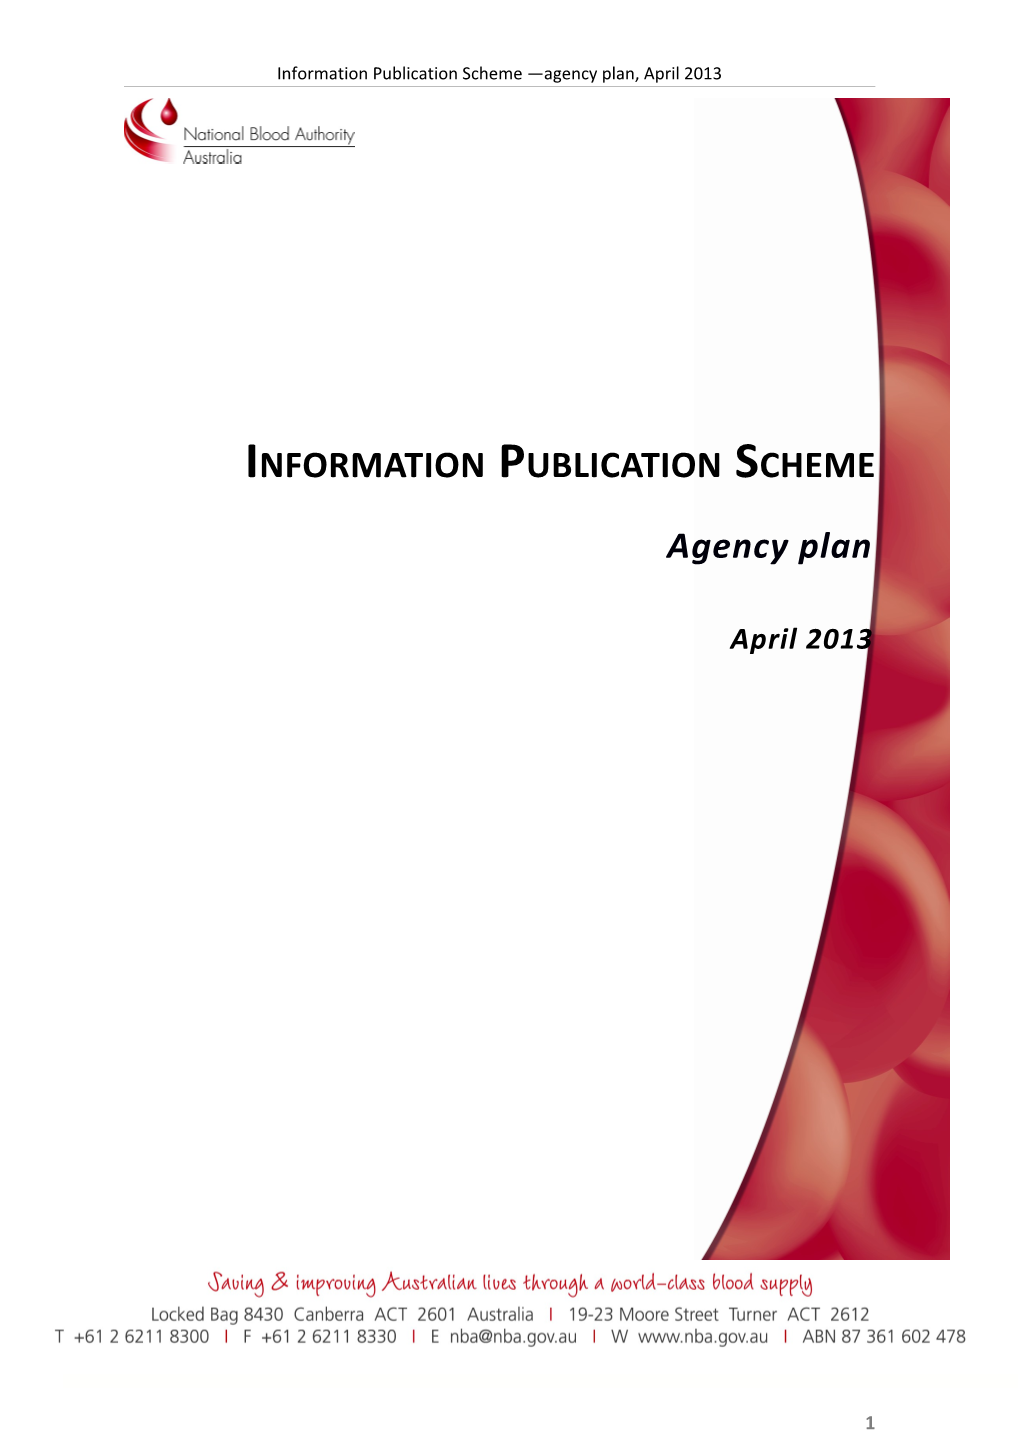 Information Publication Scheme Agency Plan, April 2013